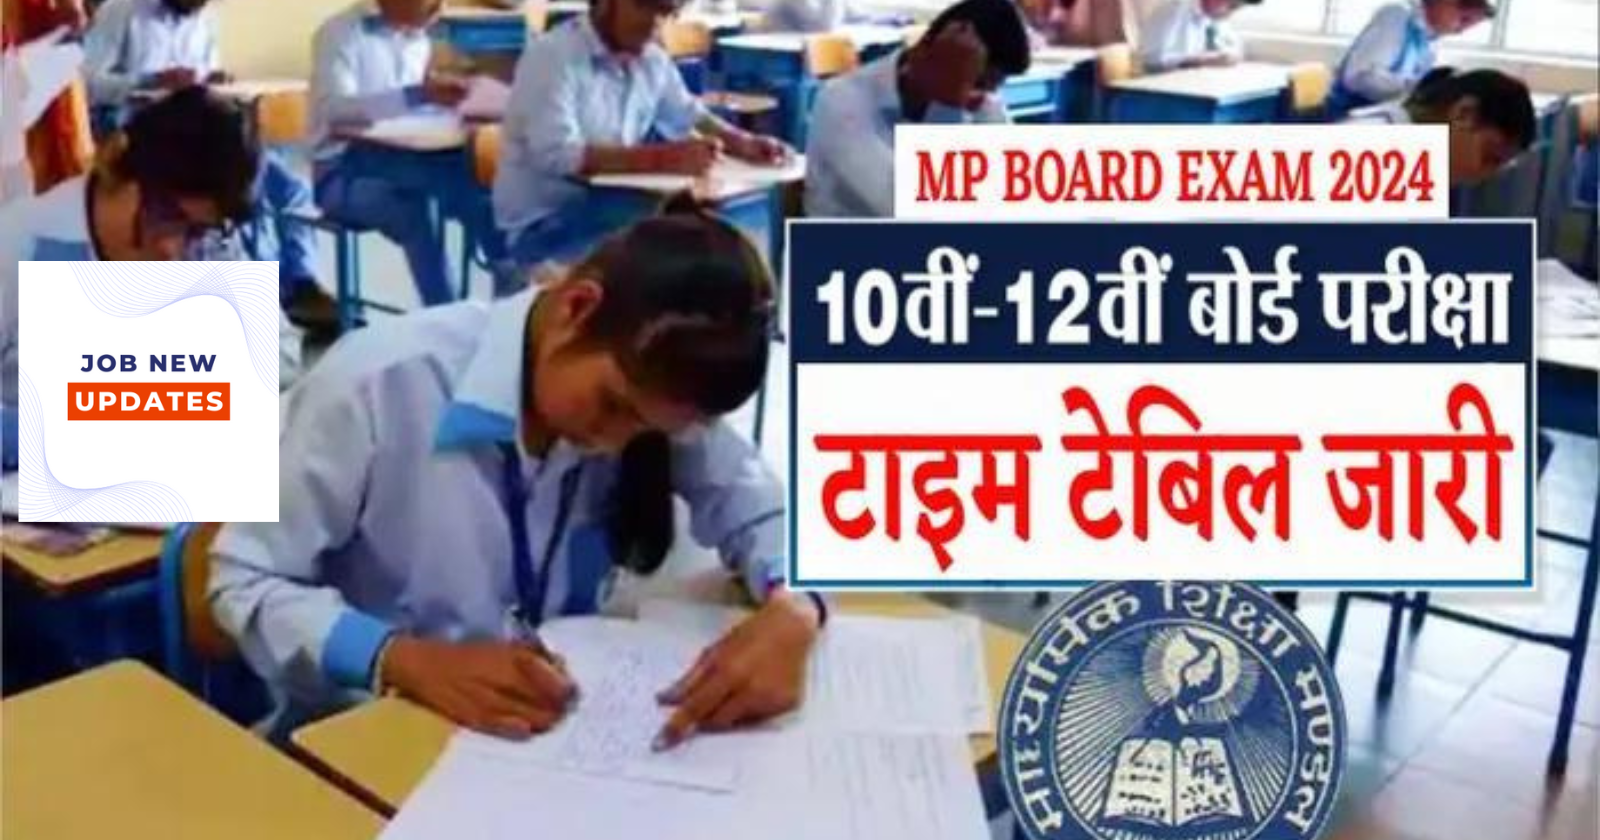 MP Board Exams 2024